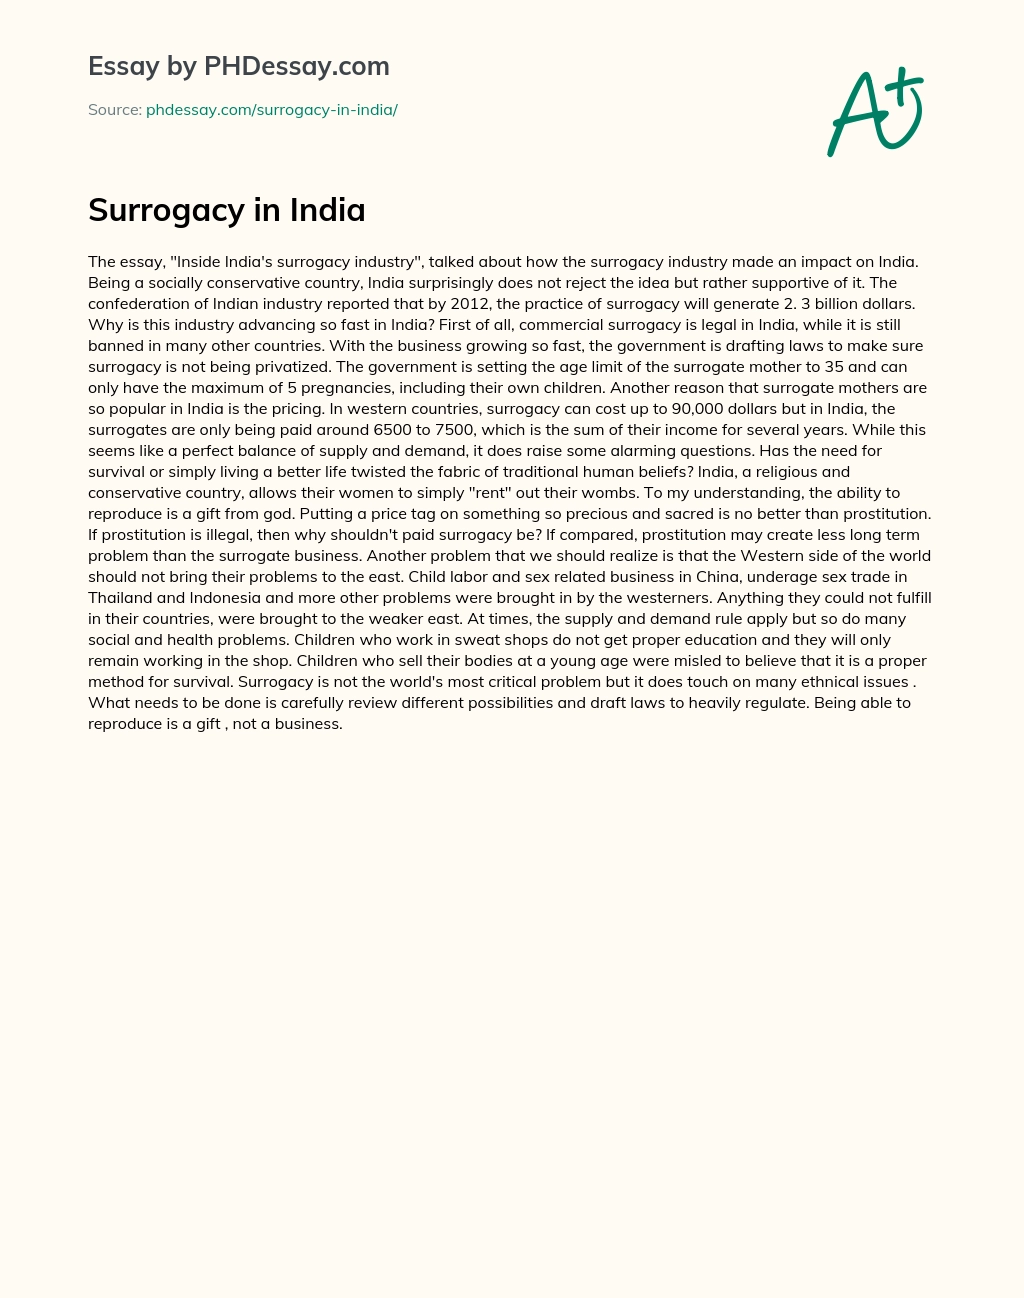 Surrogacy in India essay